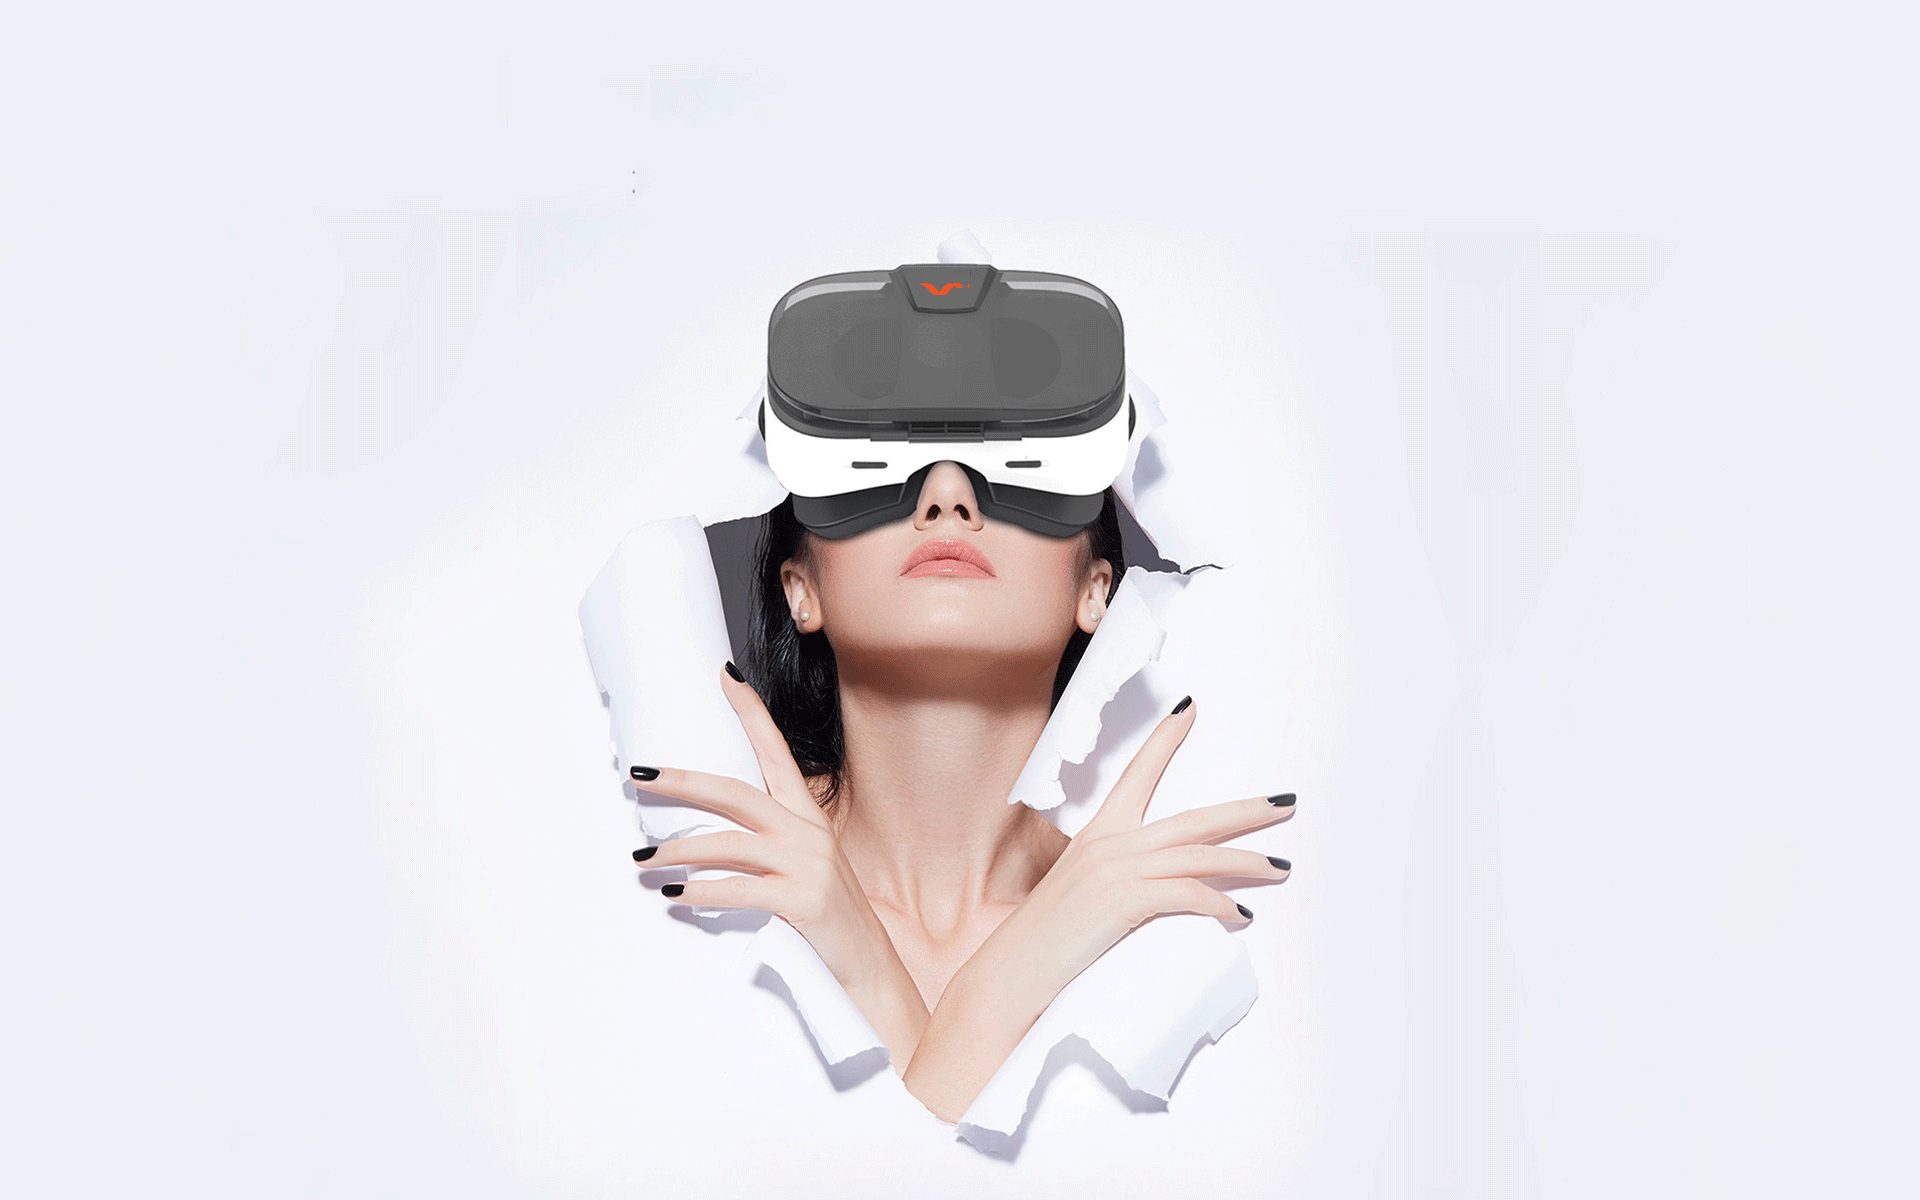 Vox+ VR Virtual Reality 3D Glasses Headset